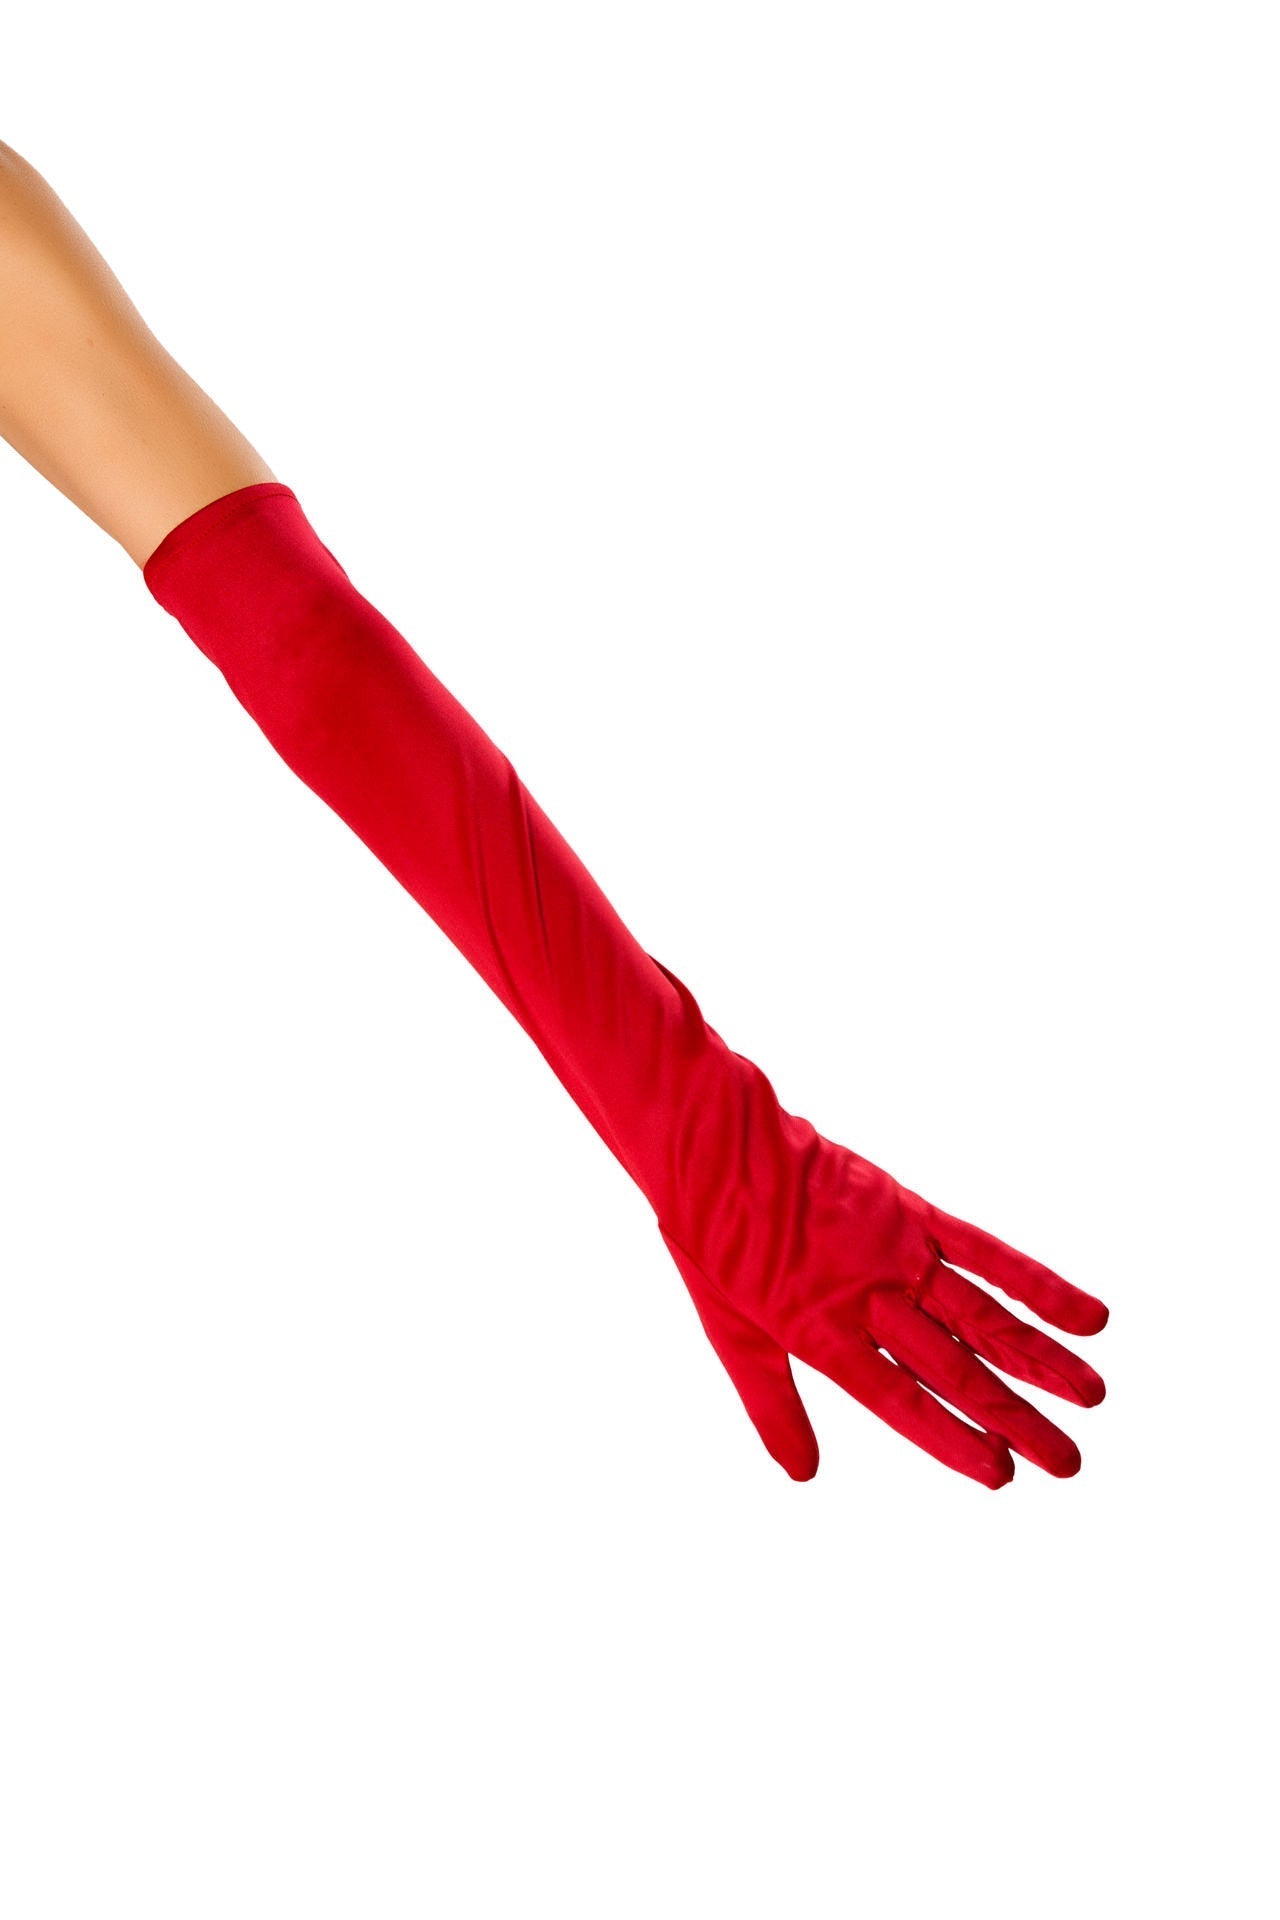 10104 - Stretch Satin Gloves Eye Candy Sensation